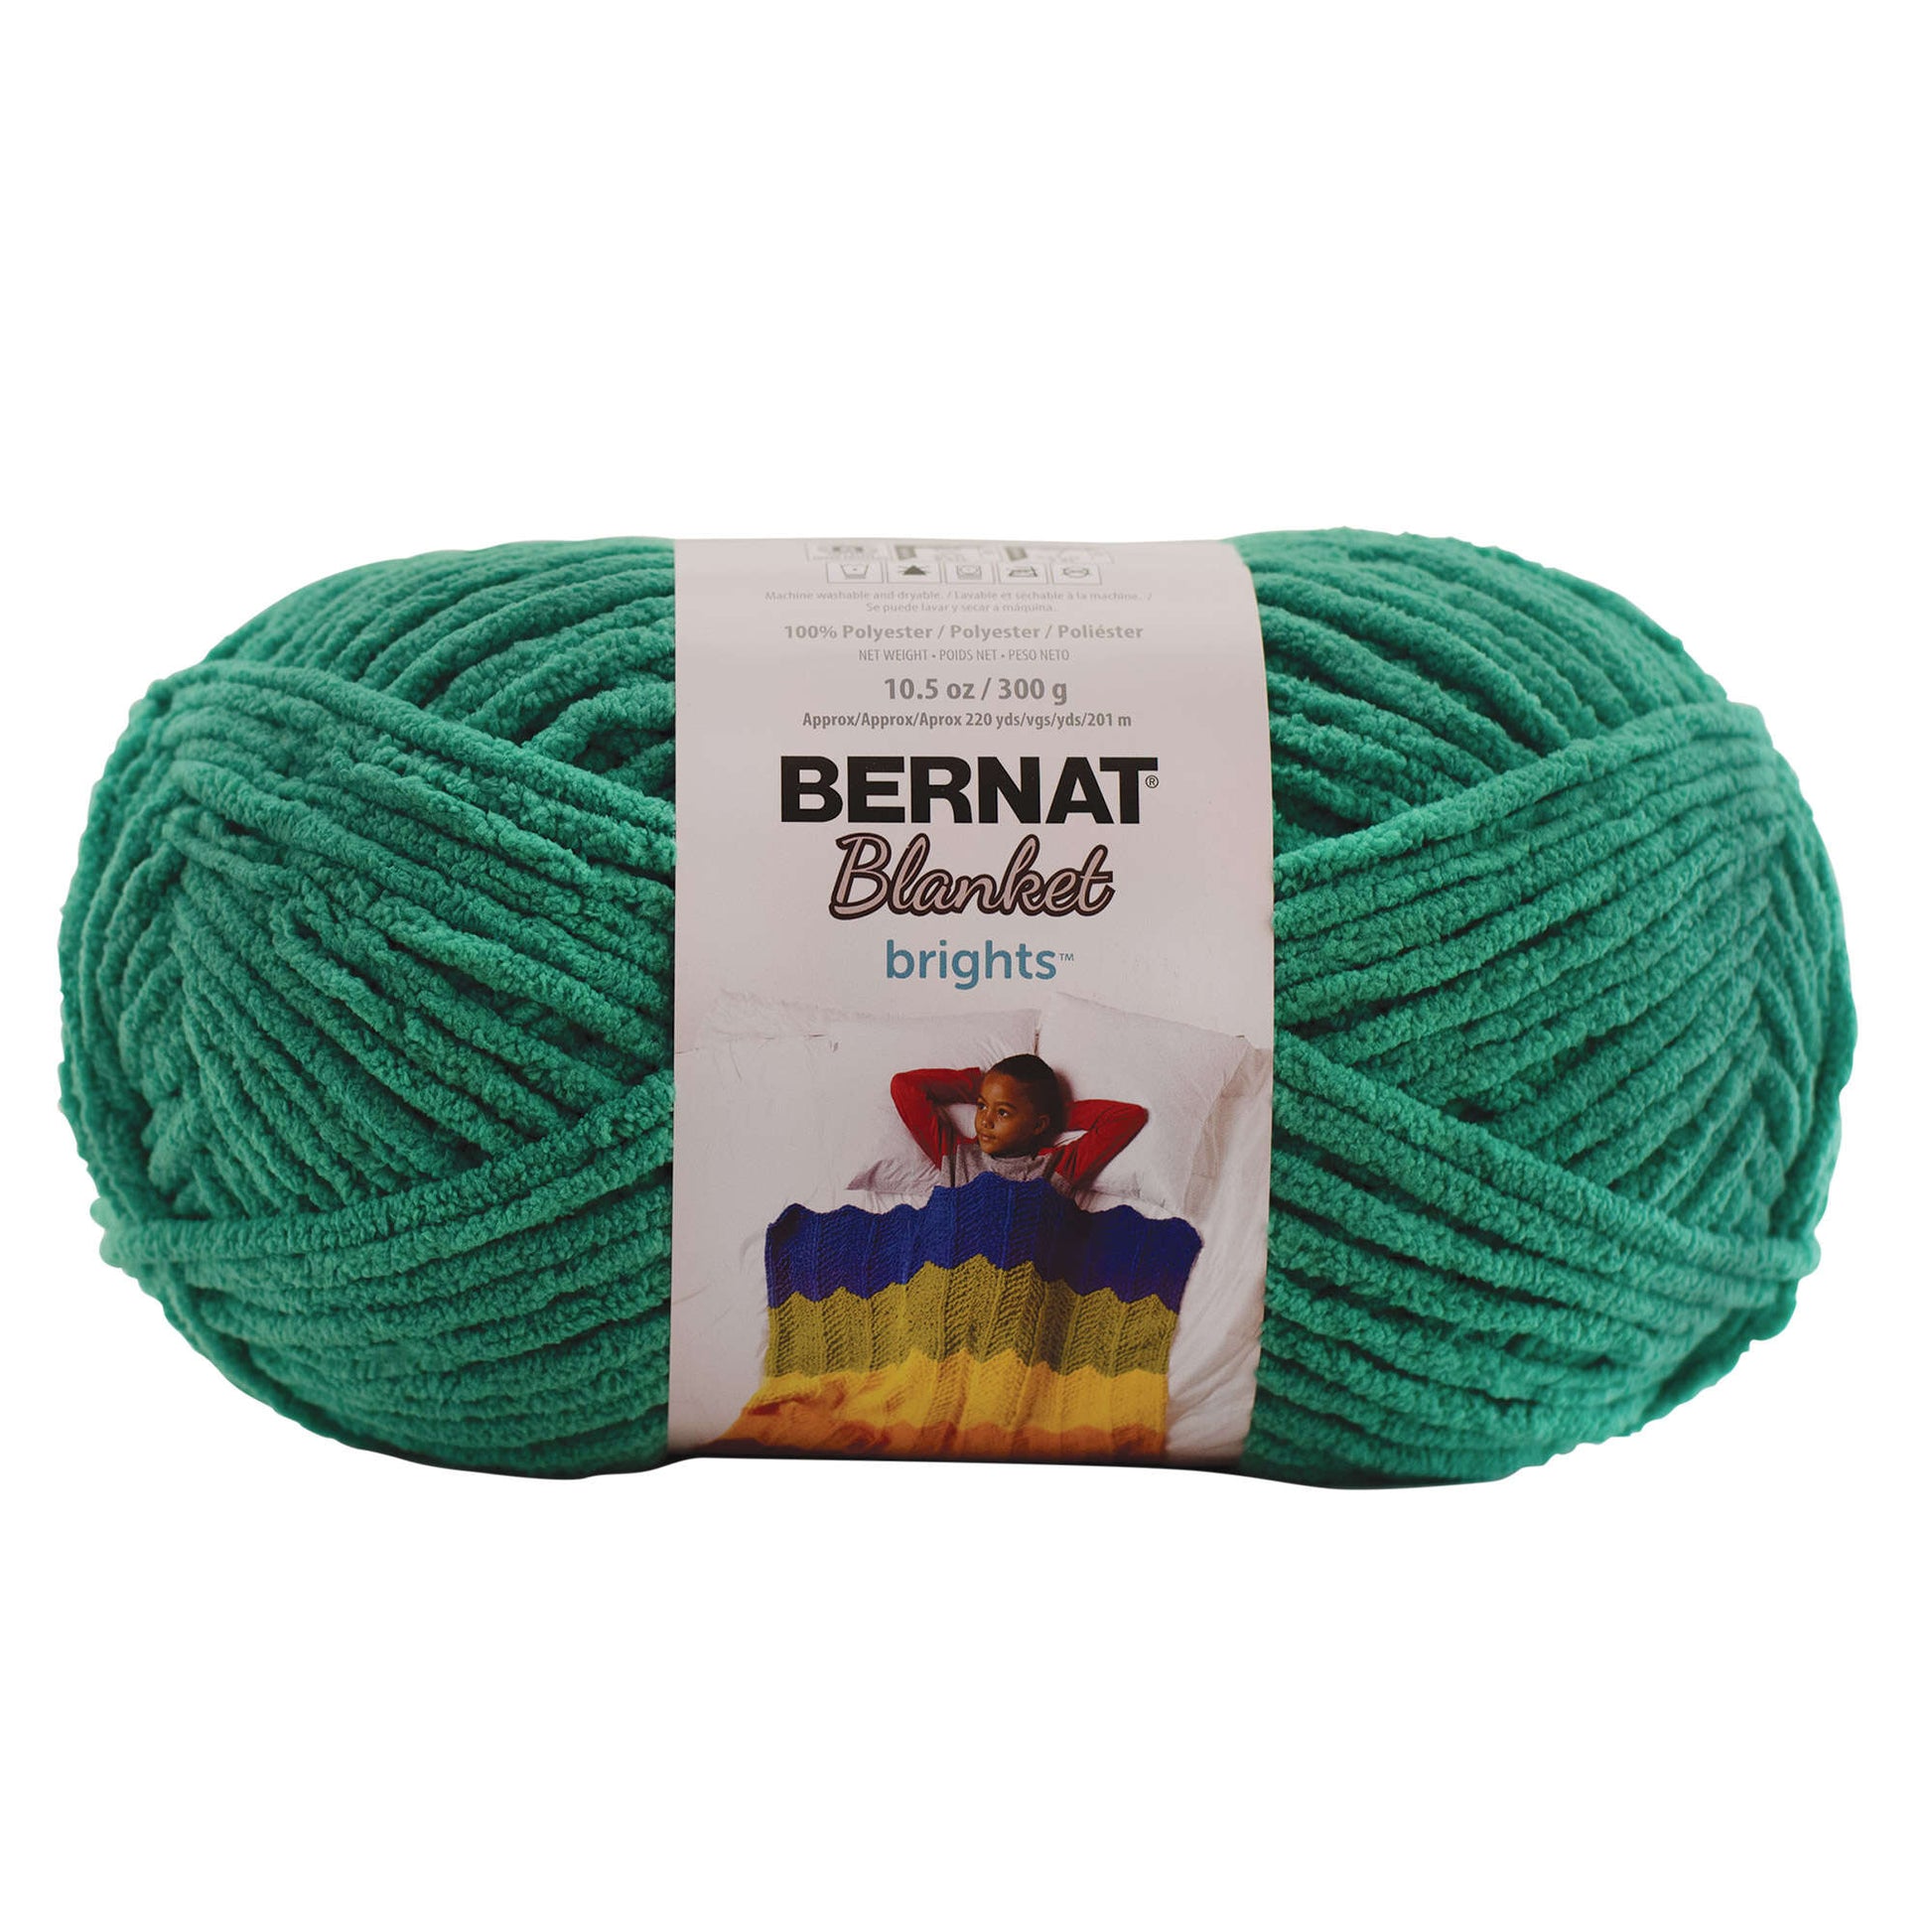 Bernat Blanket Brights Yarn (300g/10.5oz)